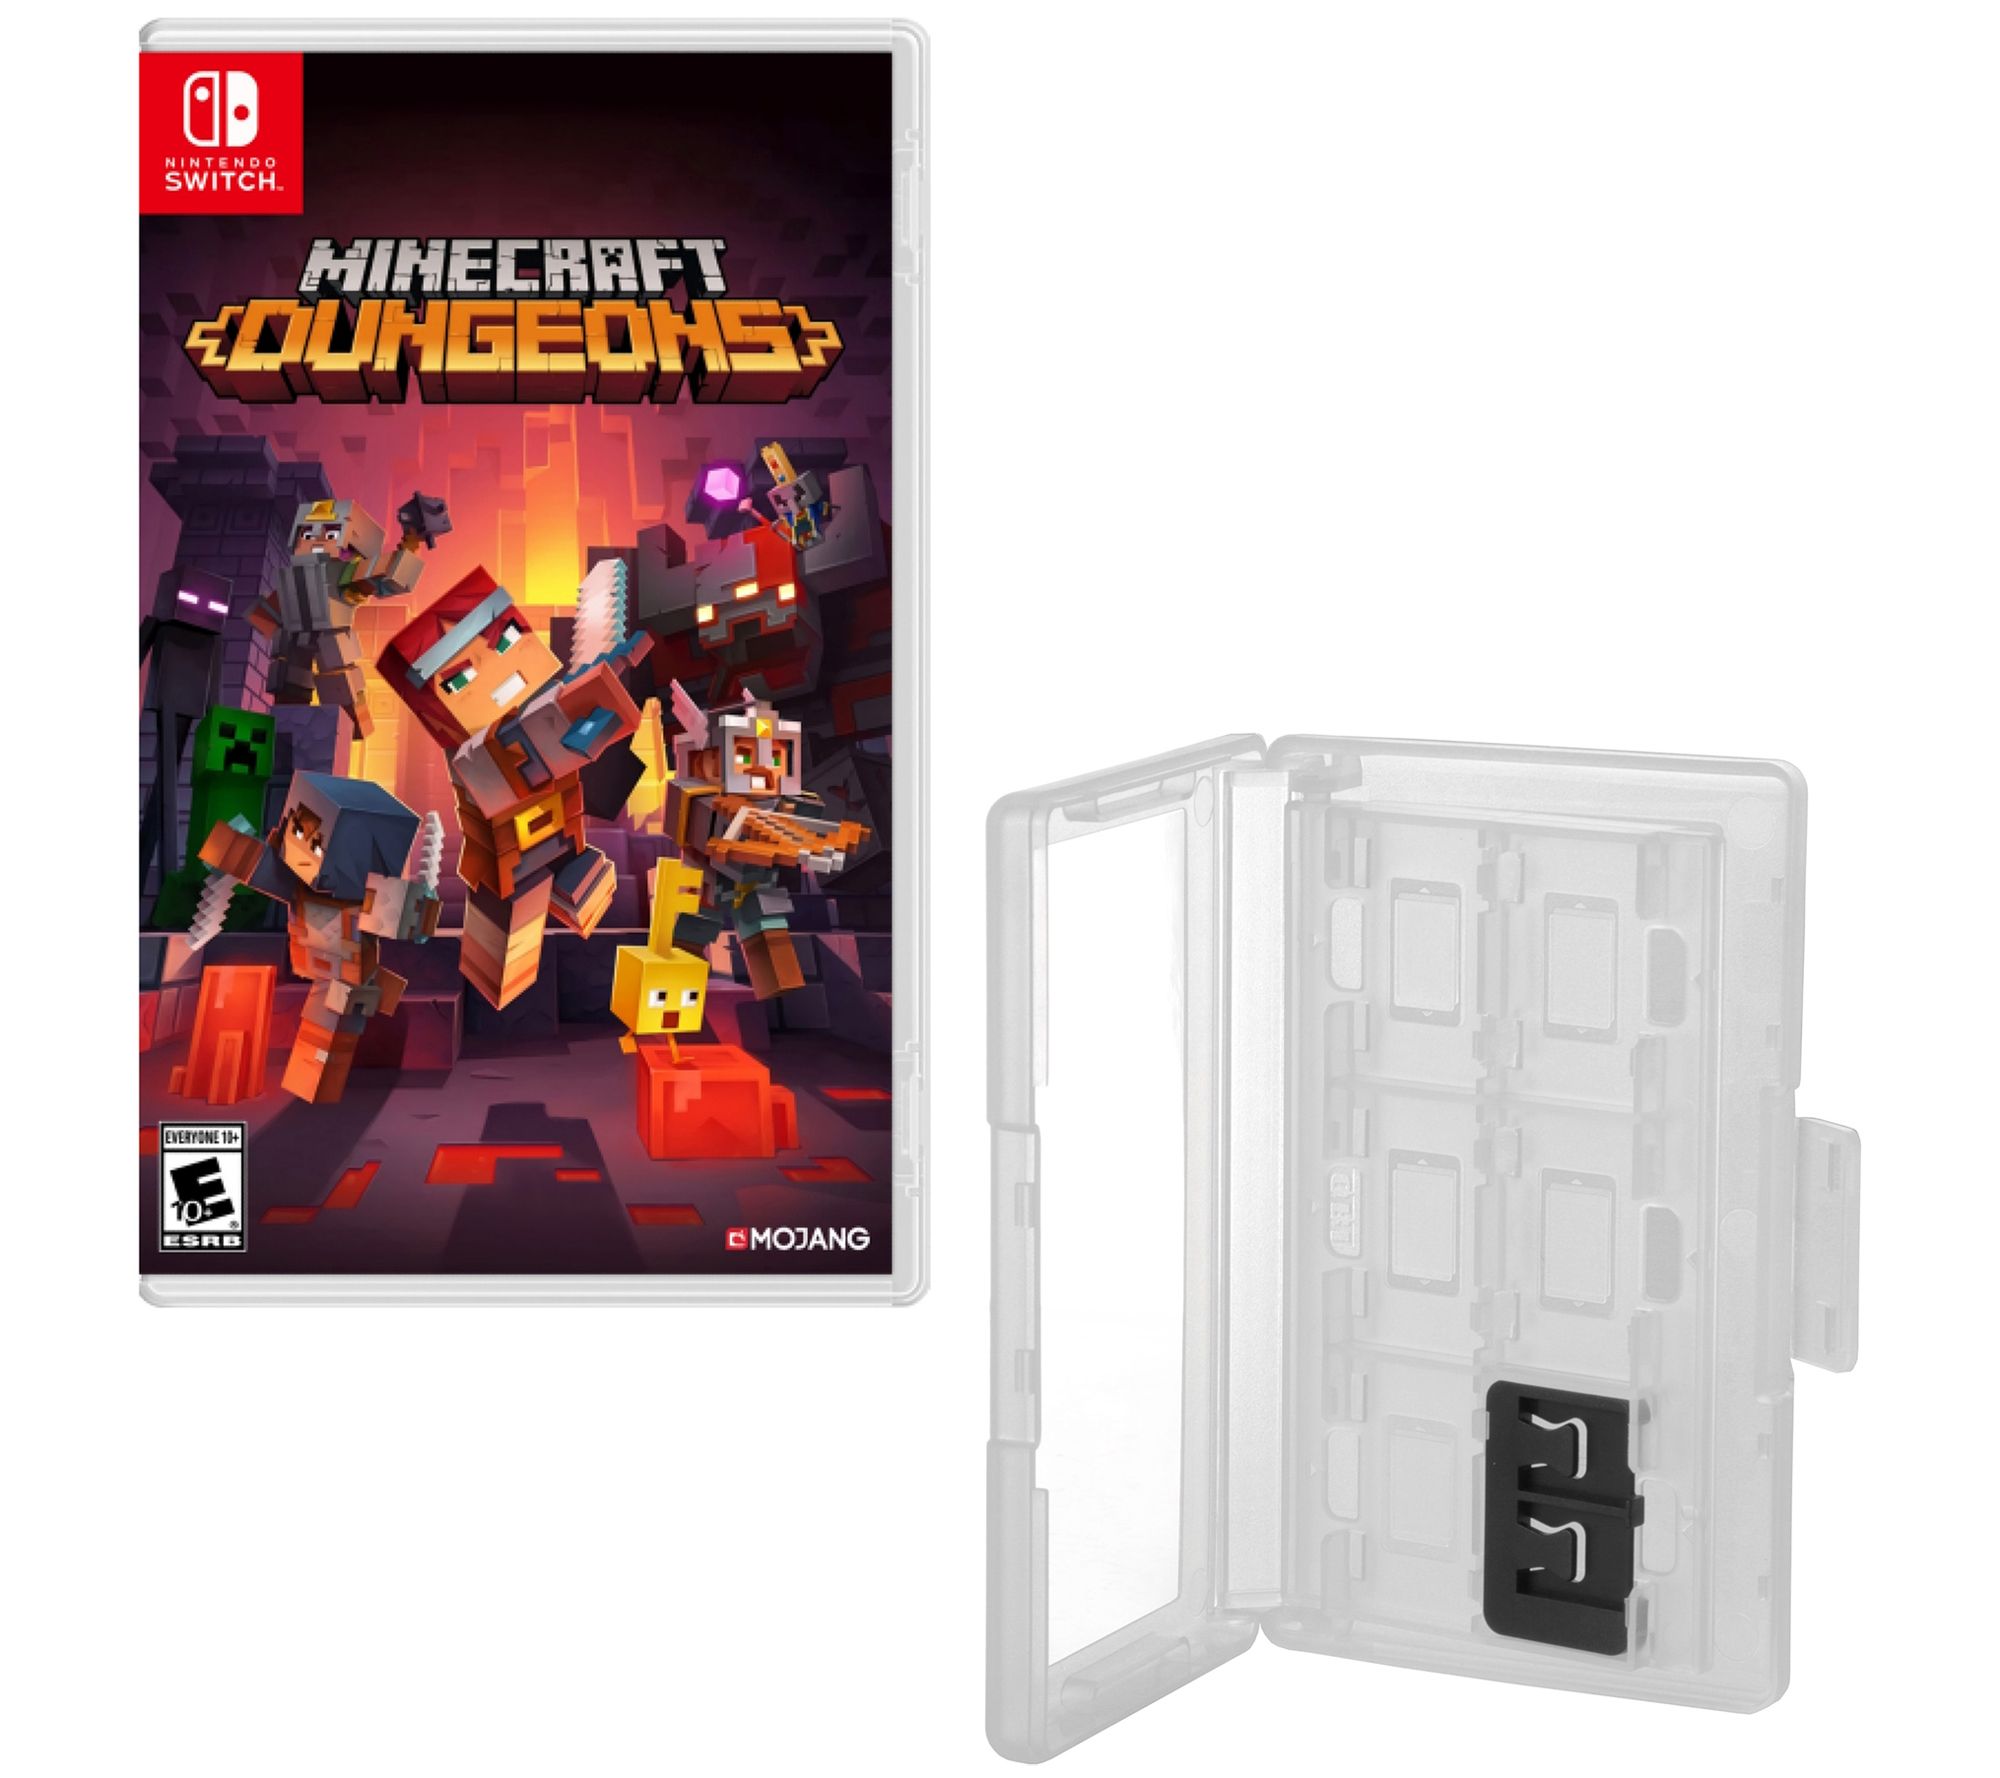 Майнкрафт данженс на Нинтендо свитч. Игра для Nintendo Switch Minecraft Dungeons Ultimate Edition. Майнкрафт данженс на Нинтендо свитч картридж. Игра Minecraft Dungeons на Nintendo Switch Лайт карта.